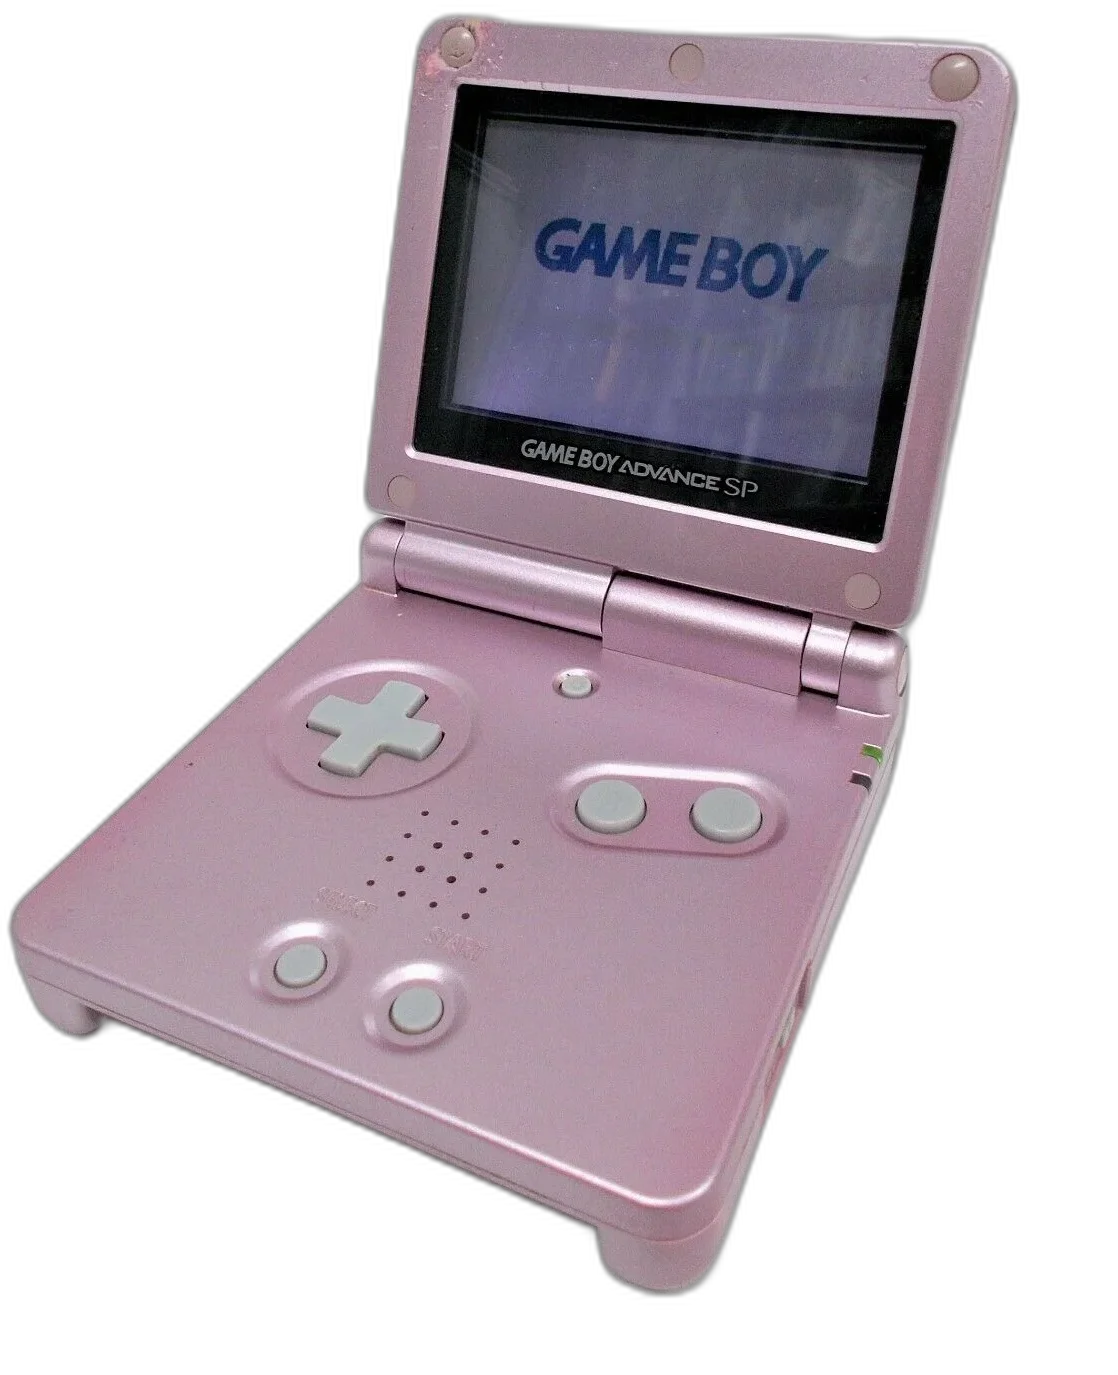  Nintendo Game Boy Advance SP Pearl Pink Console [AUS]